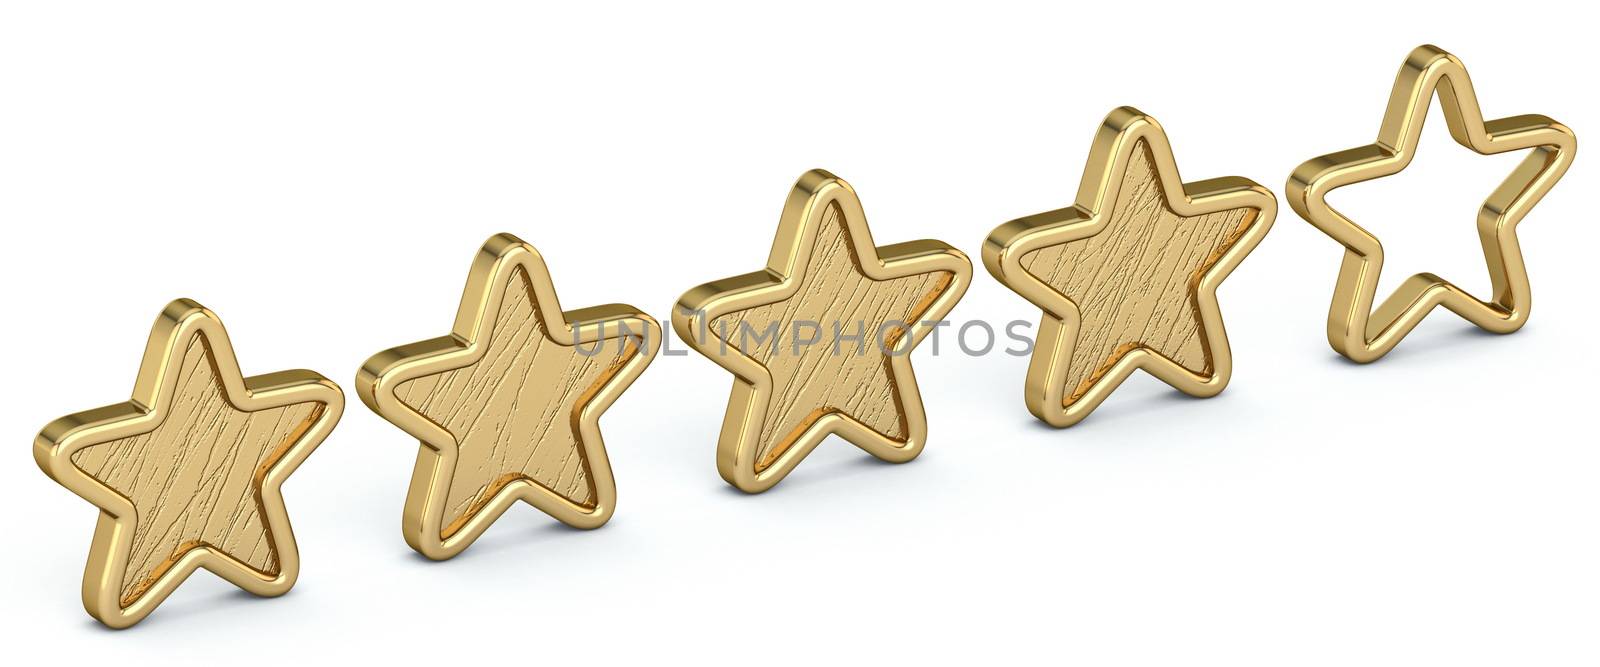 Voting concept rating FOUR golden stars 3D render illustration isolated on white background